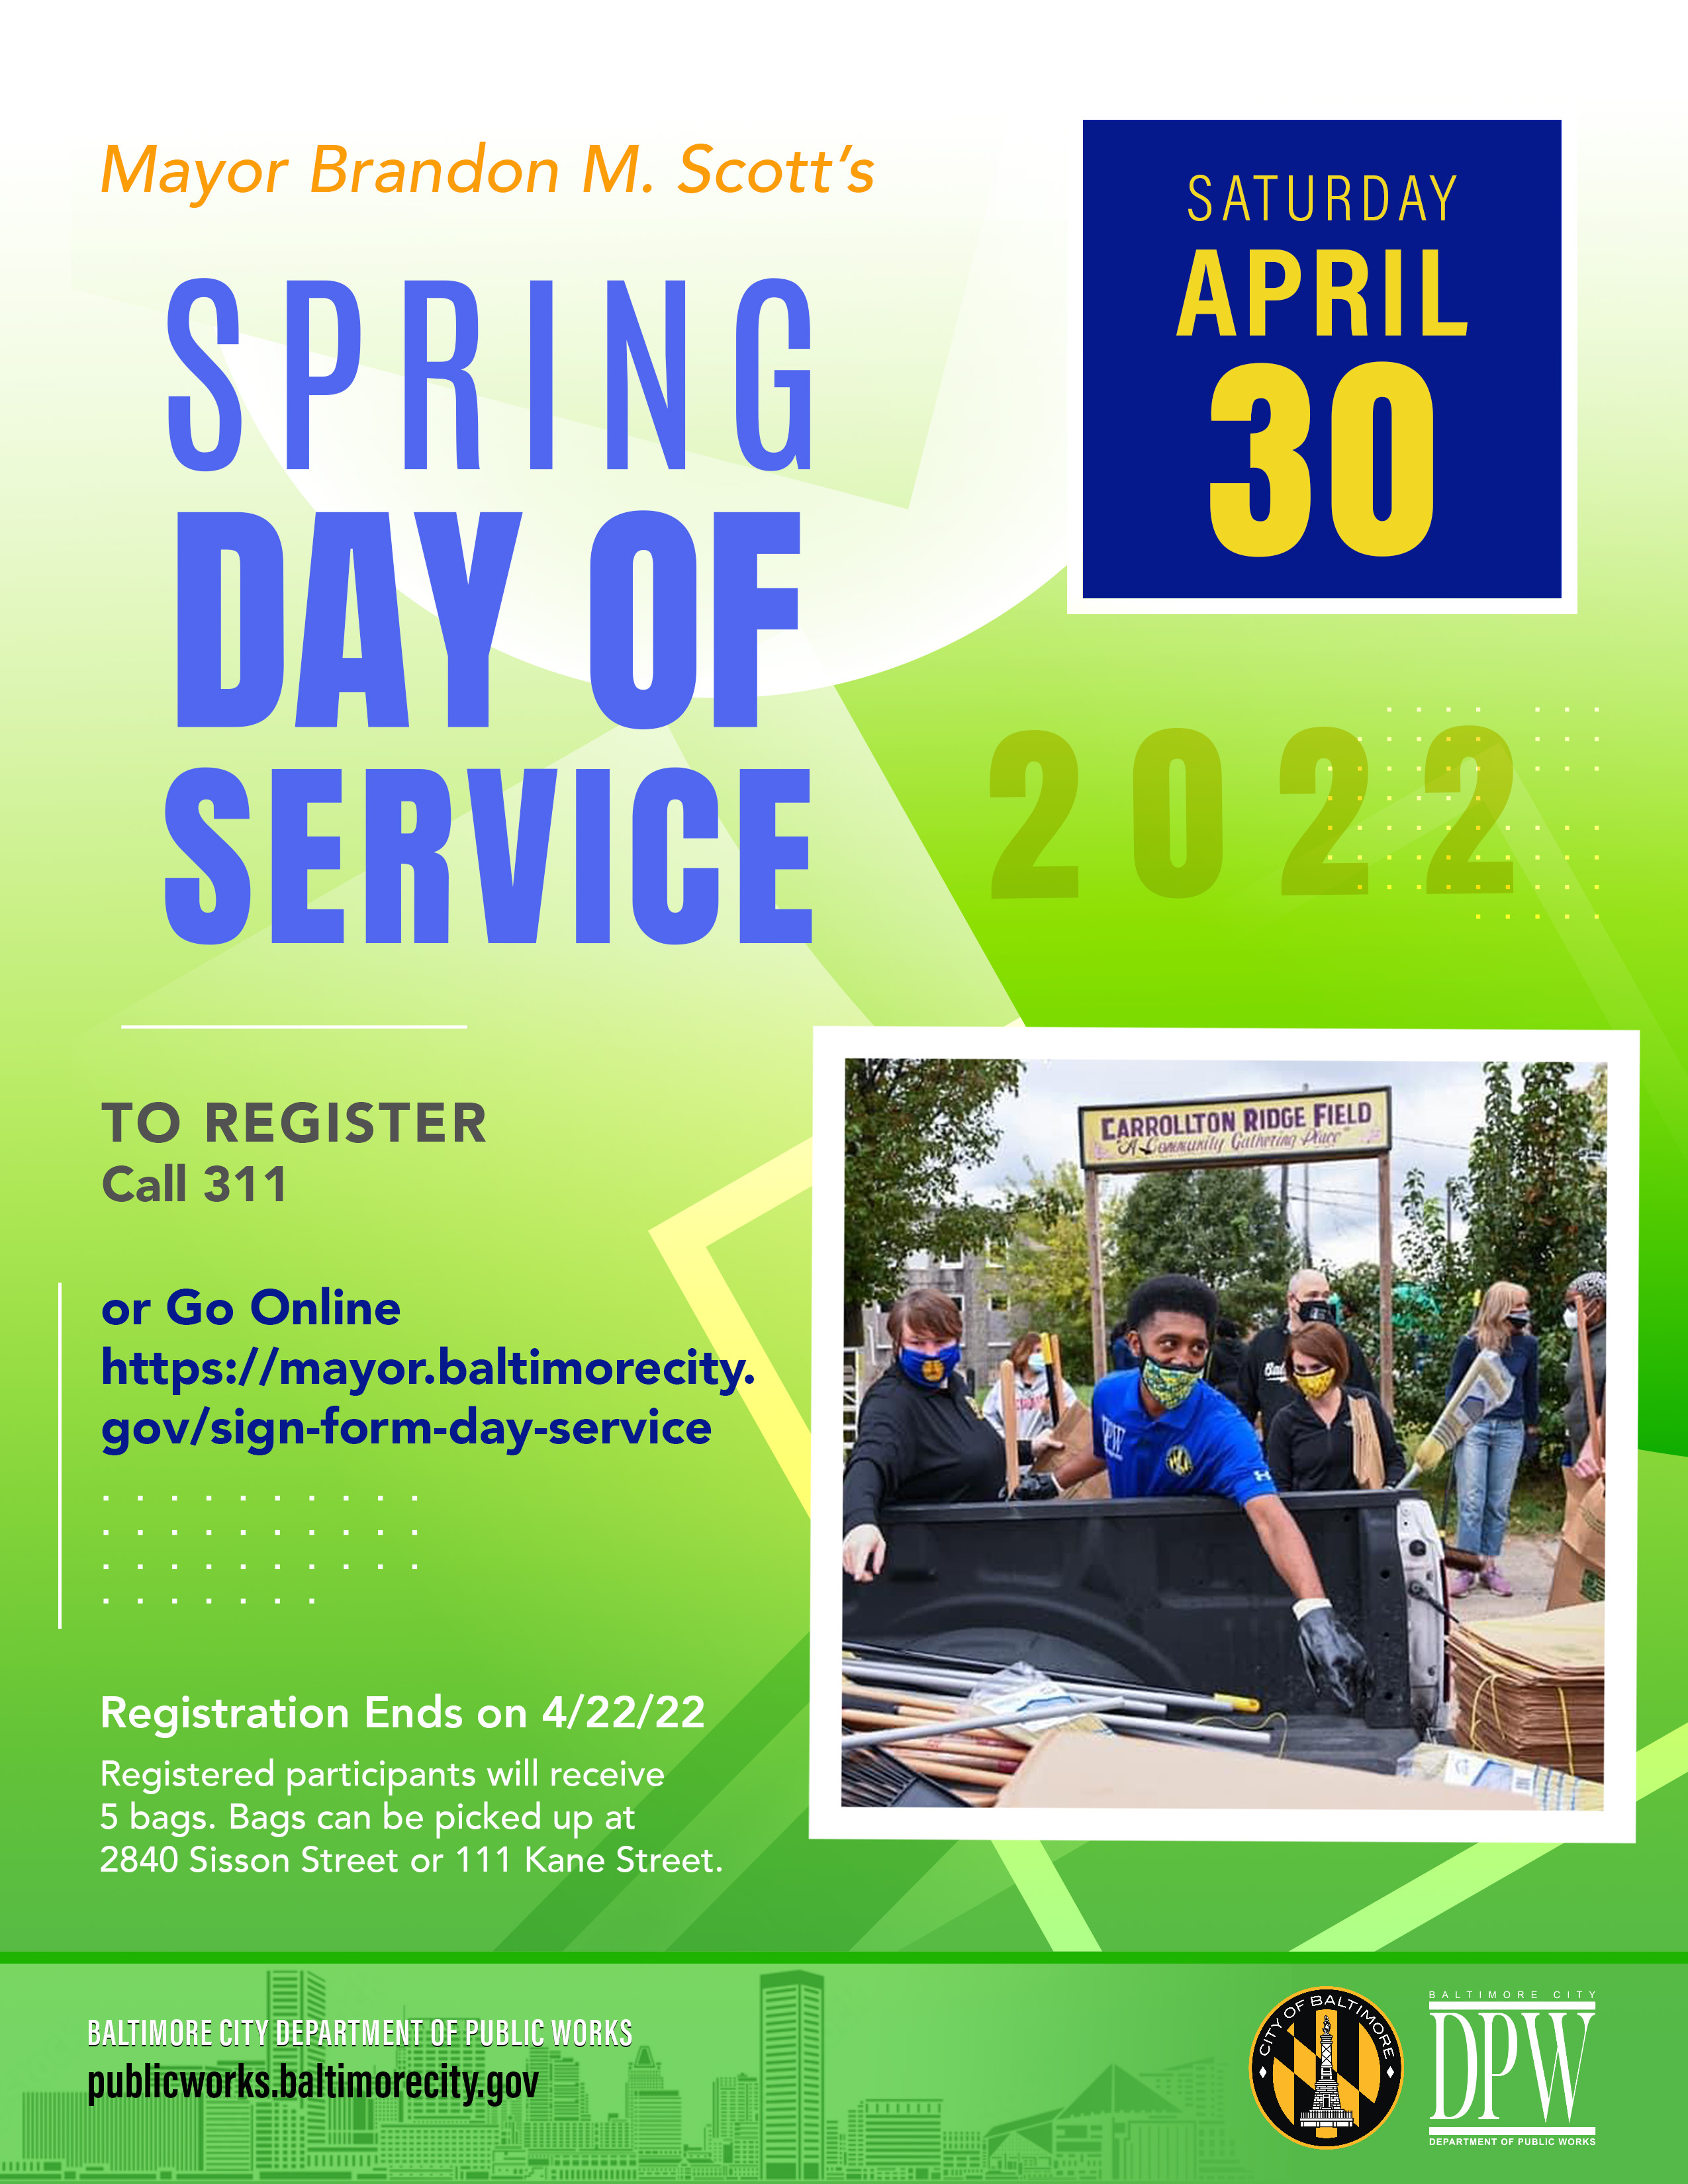 Mayor Brandon M. Scott's Spring Day of Service April 30 